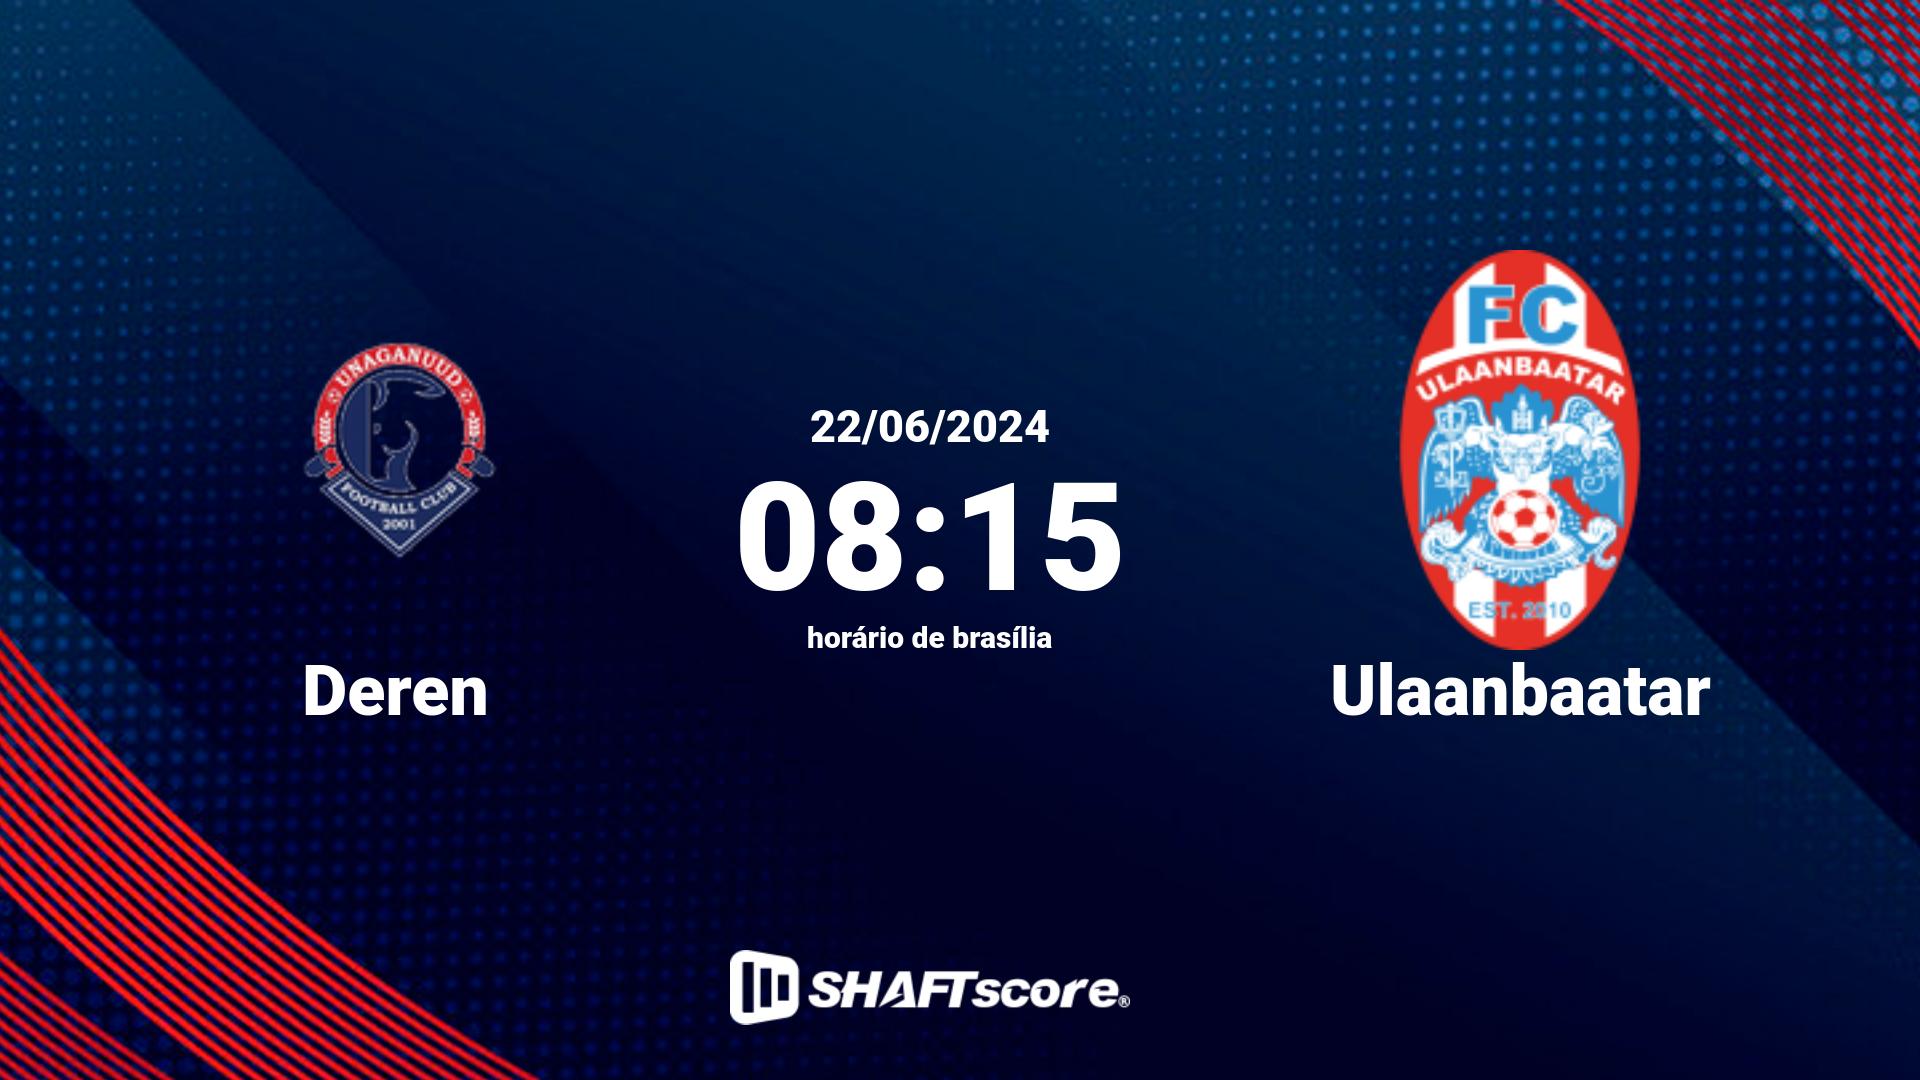 Estatísticas do jogo Deren vs Ulaanbaatar 22.06 08:15